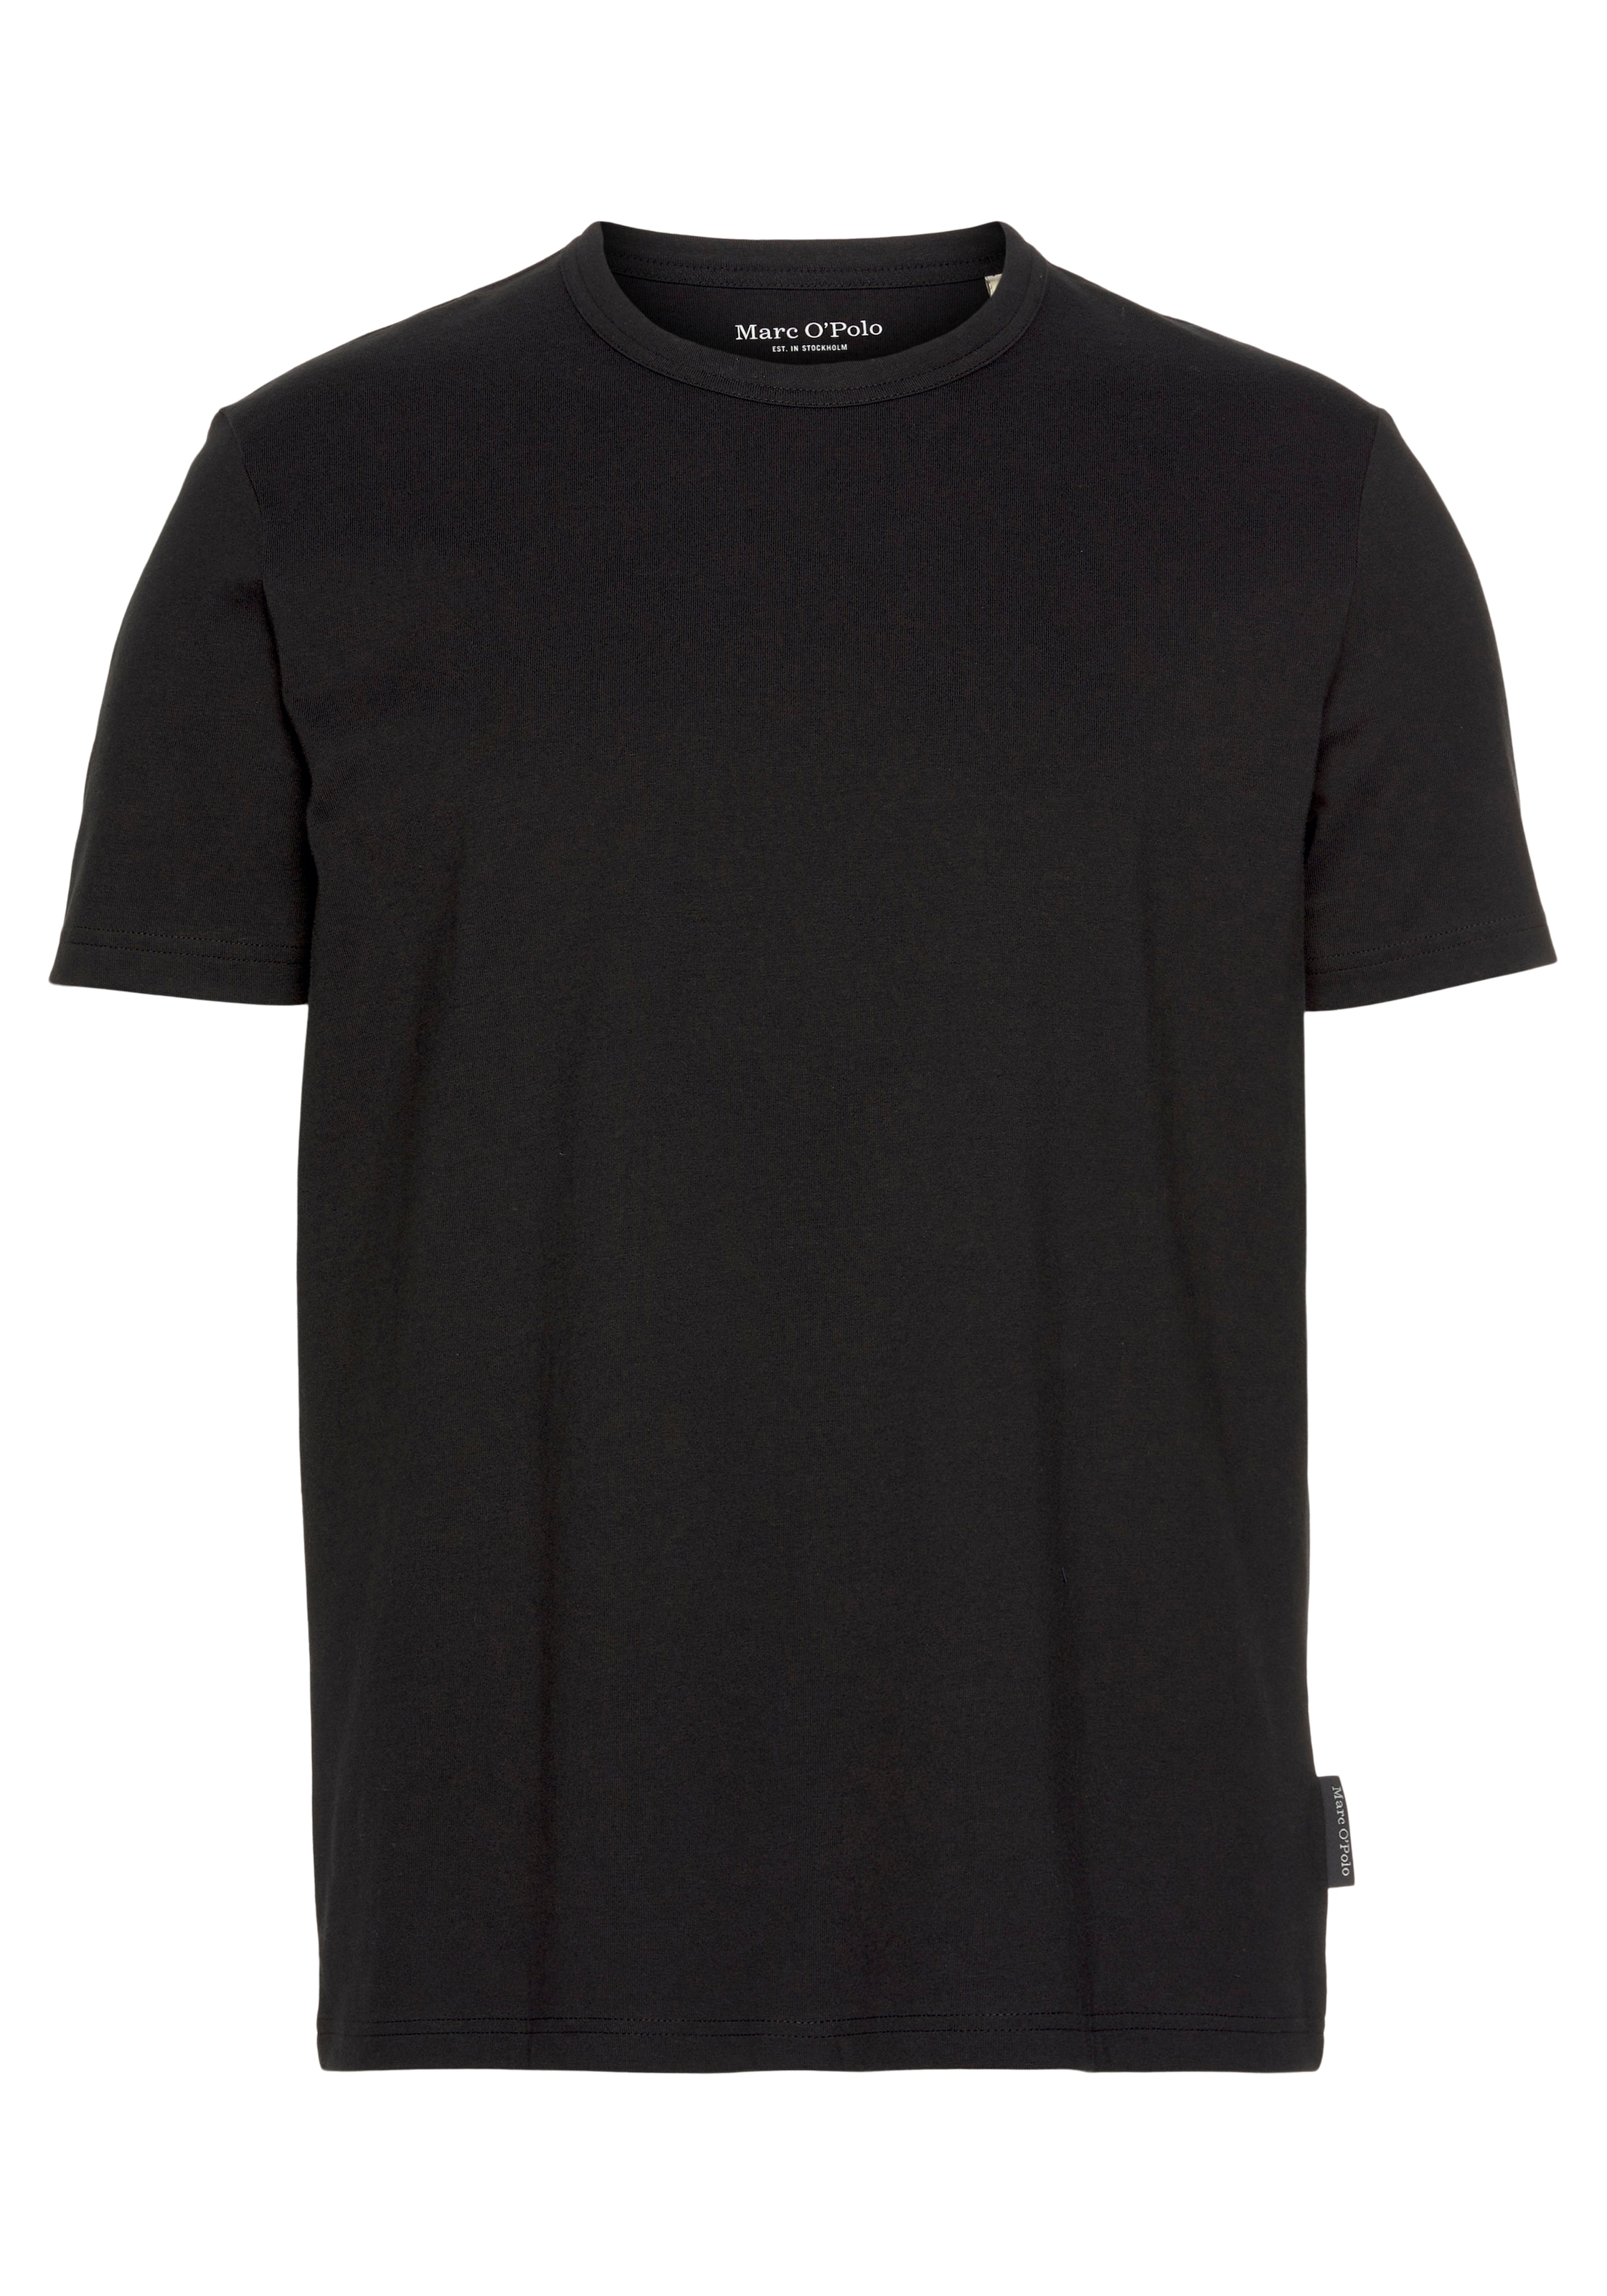 Marc O'Polo T-Shirt, Rundhals-T-Shirt Regular aus hochwertiger Baumwolle